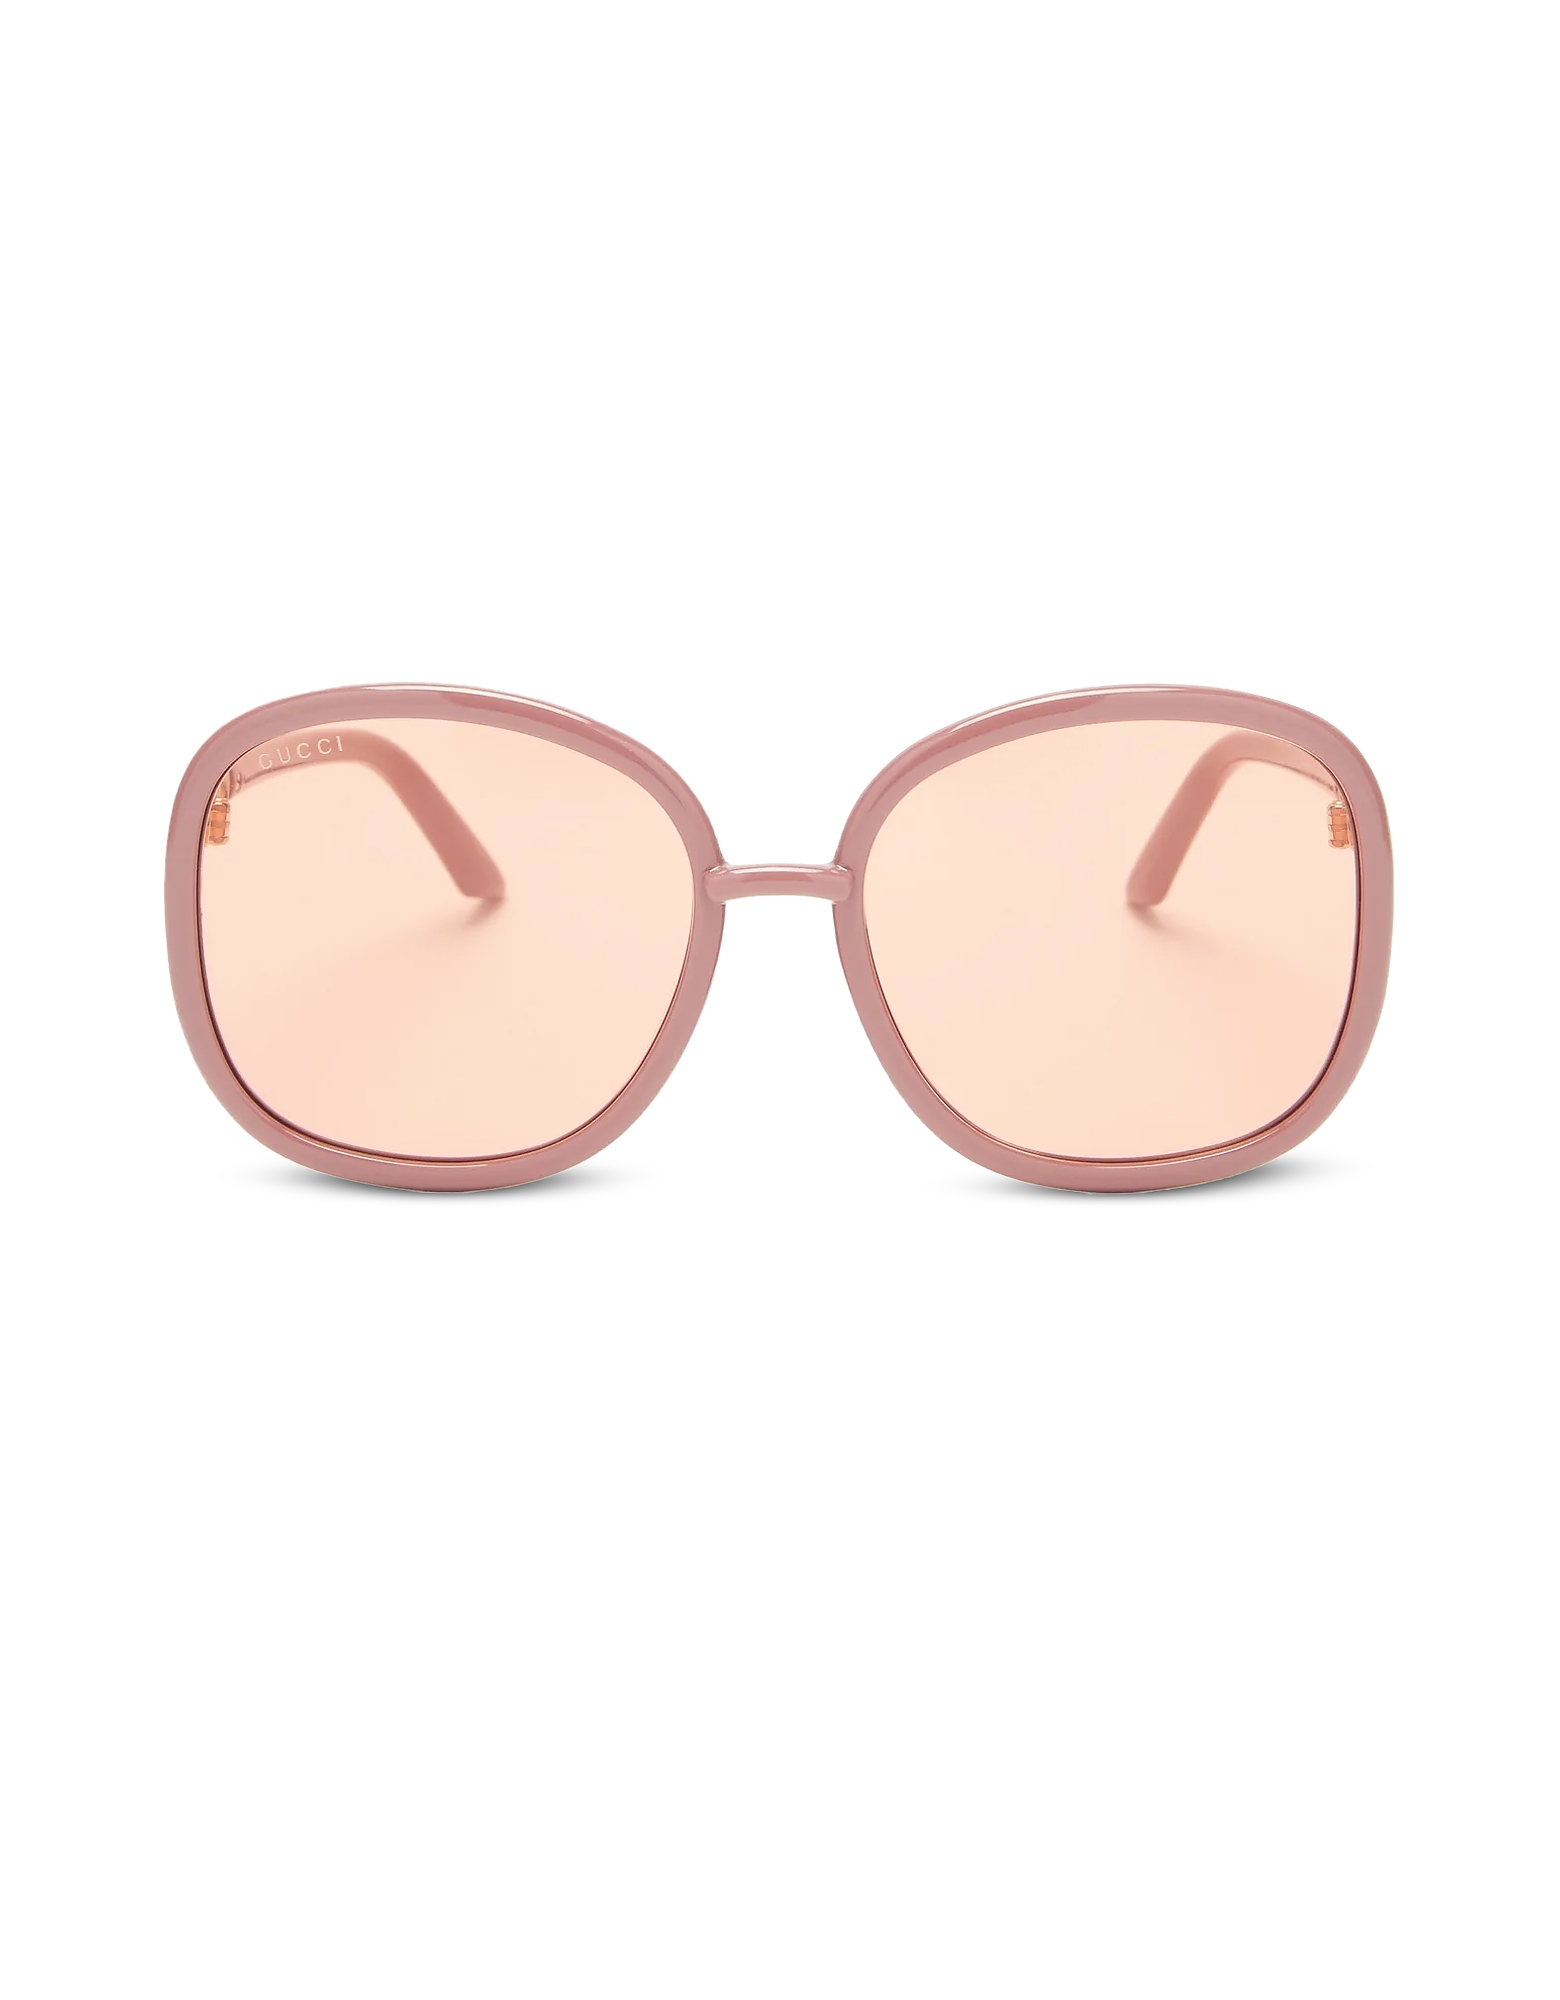 Gucci Sunglasses Horsebit Oversized Round-frame Pink Acetate Women's Sunglasses